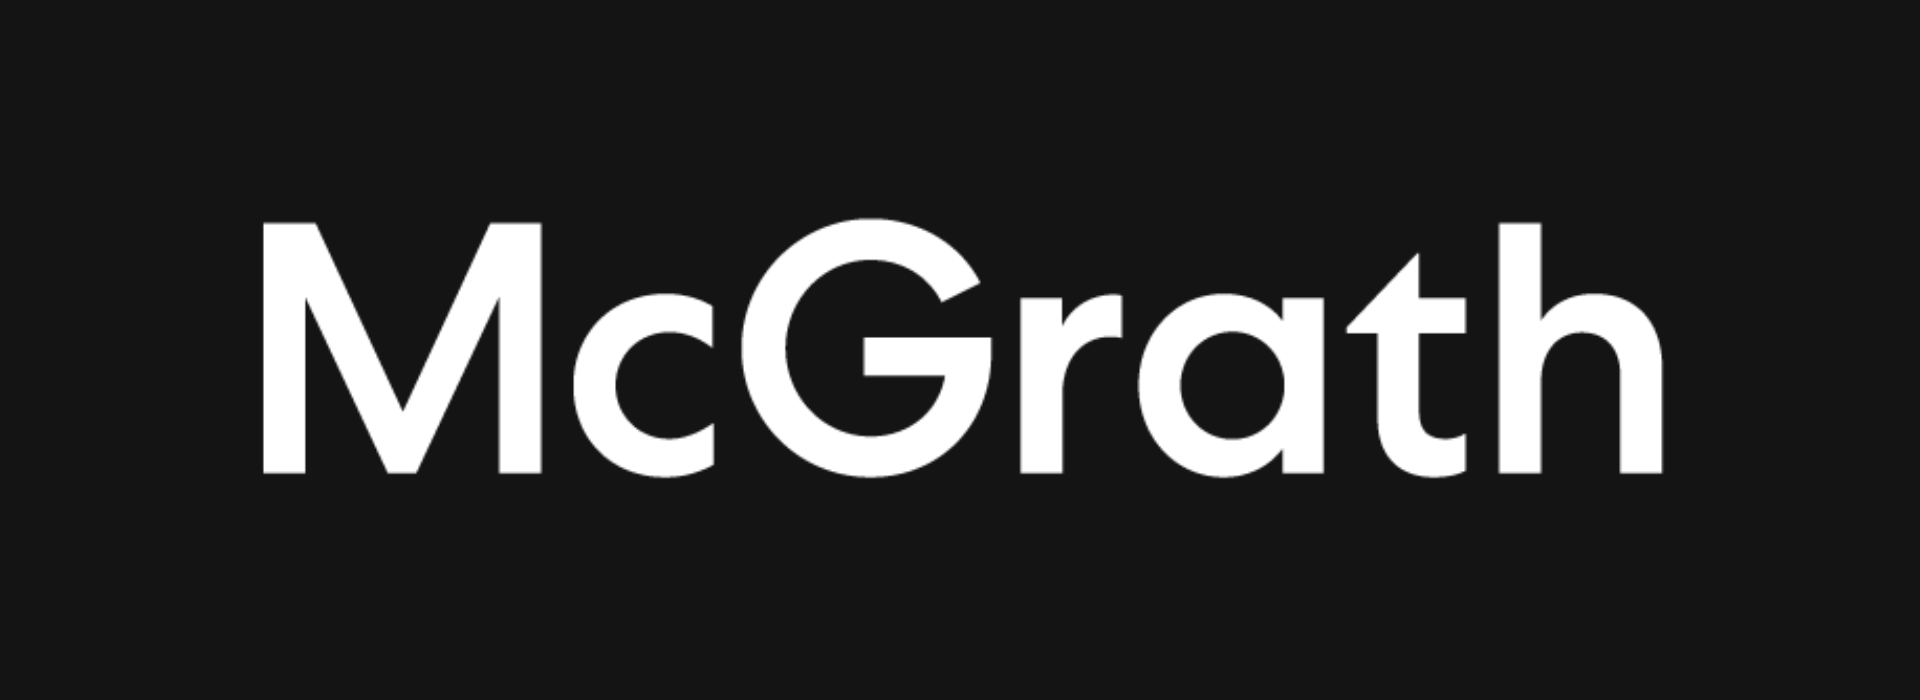 McGrath Gosford's logo